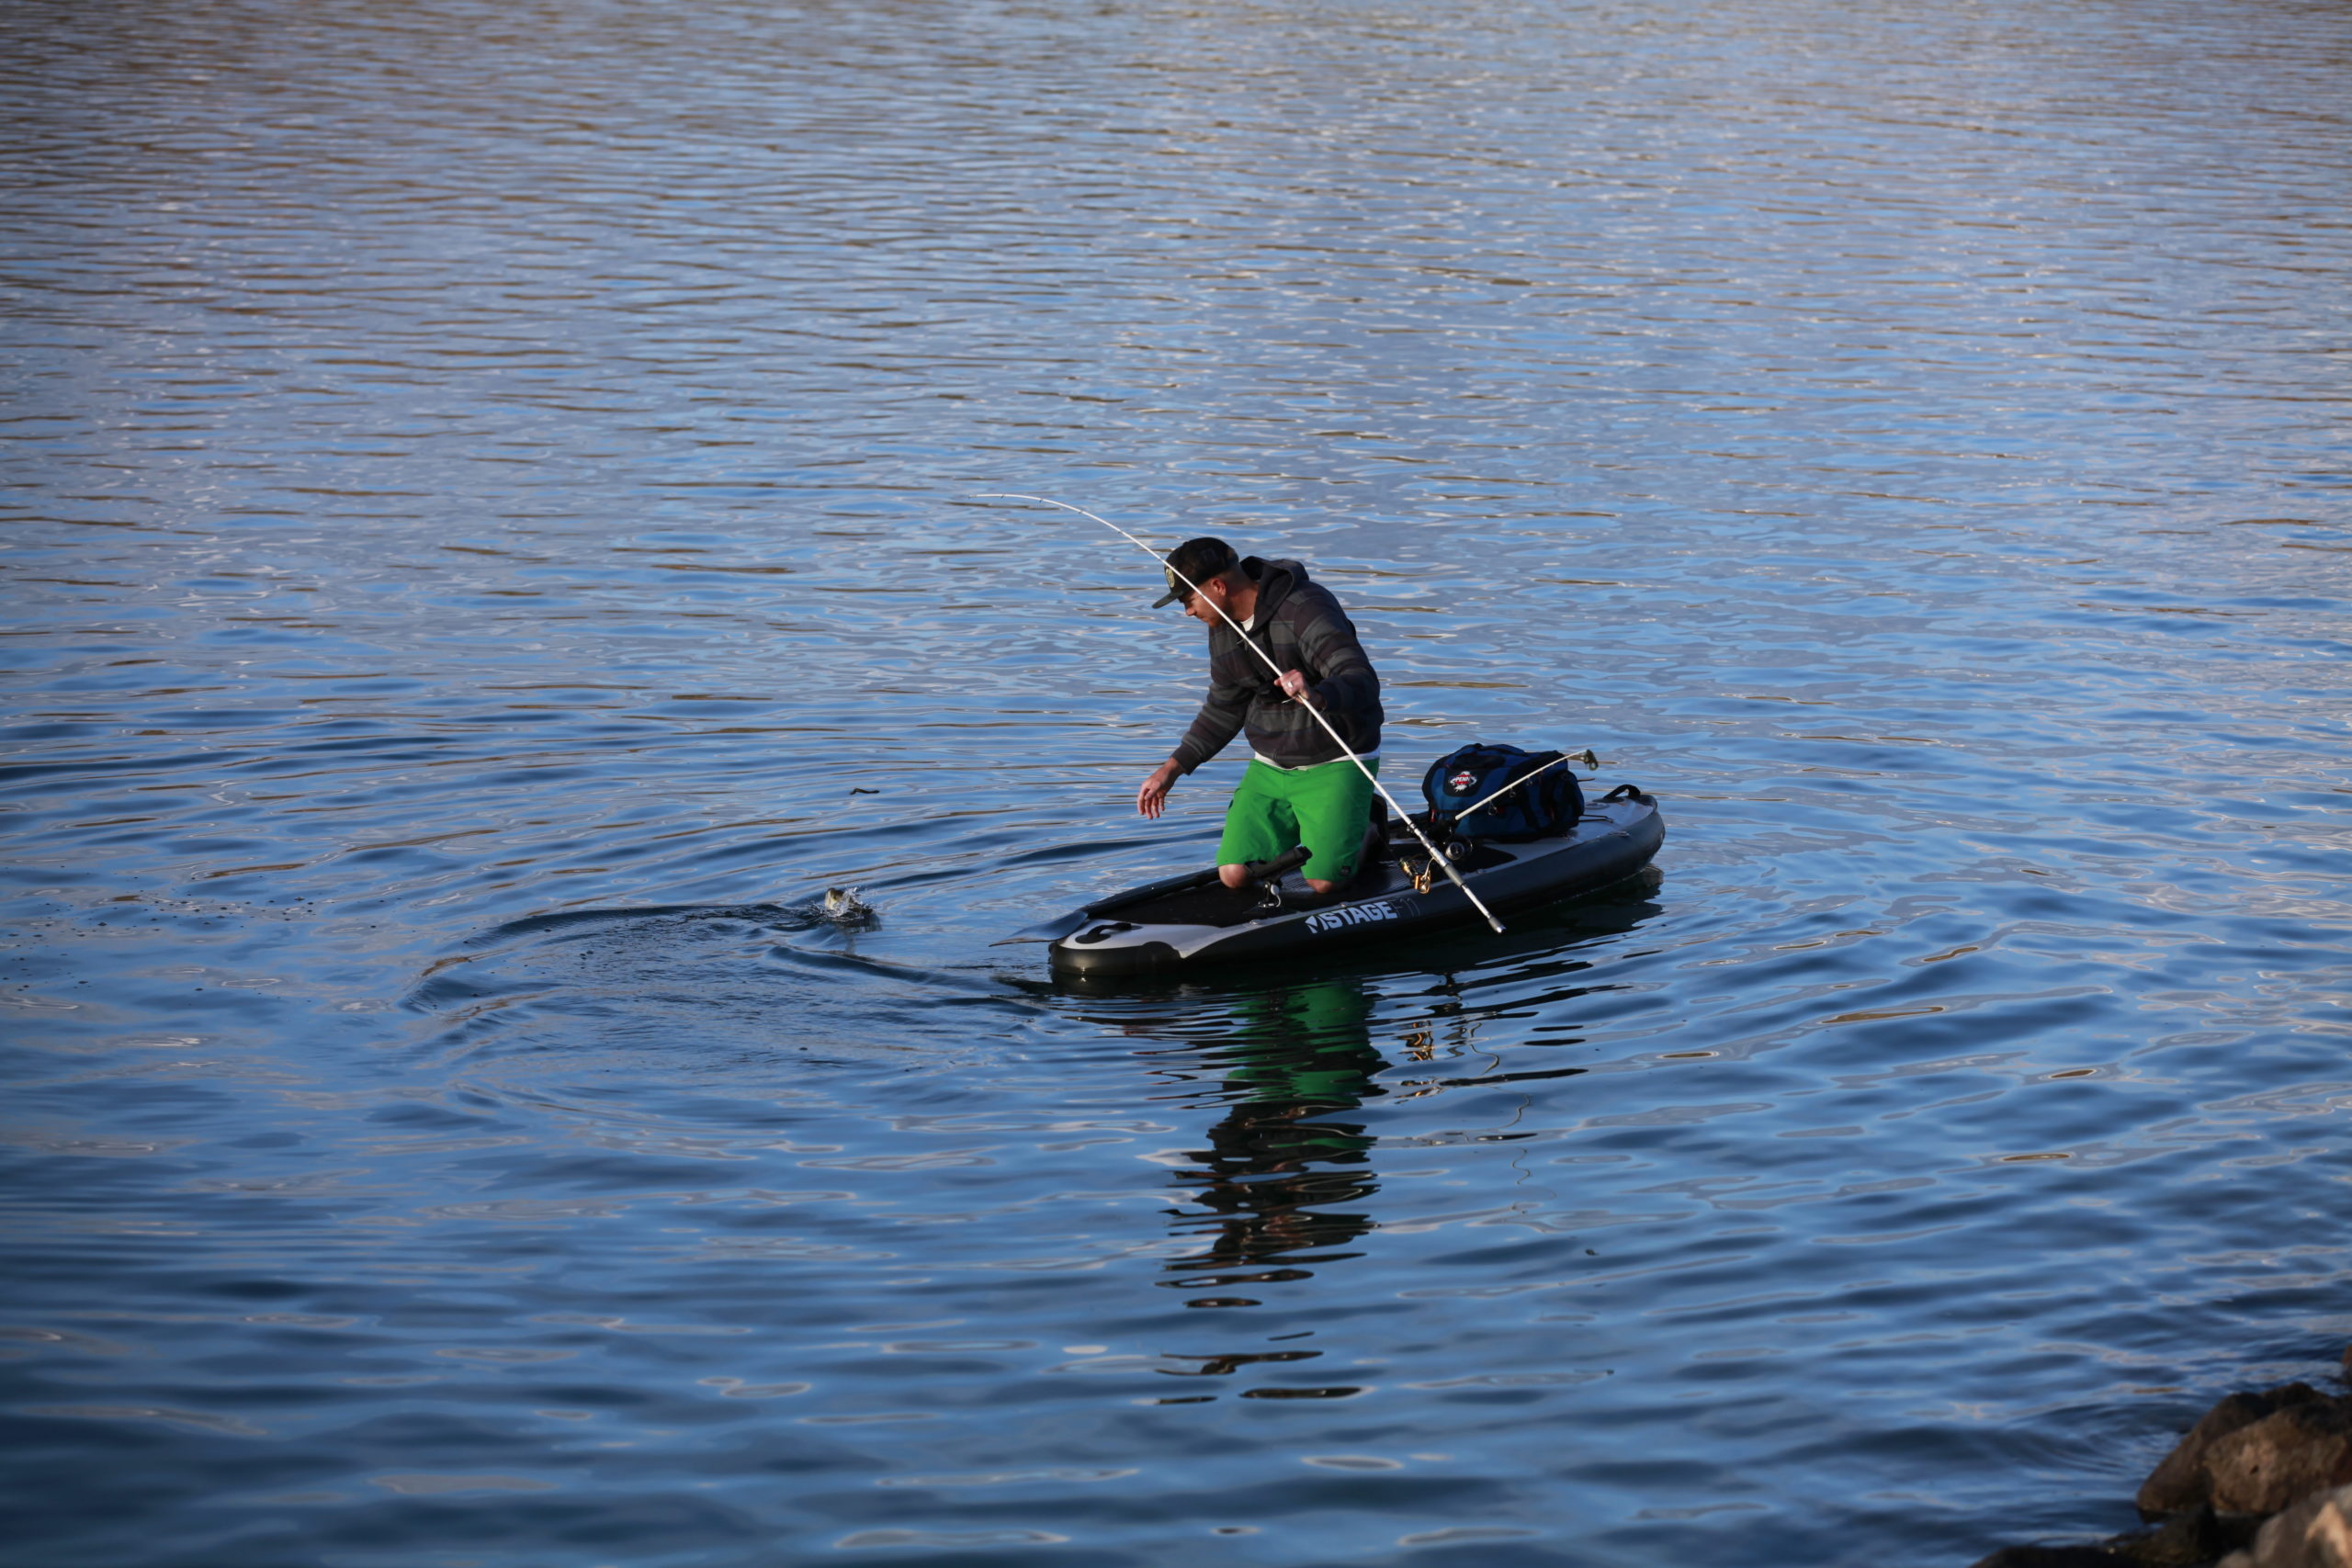 Paddle Board Set Up for Fishing - Kraken Bass